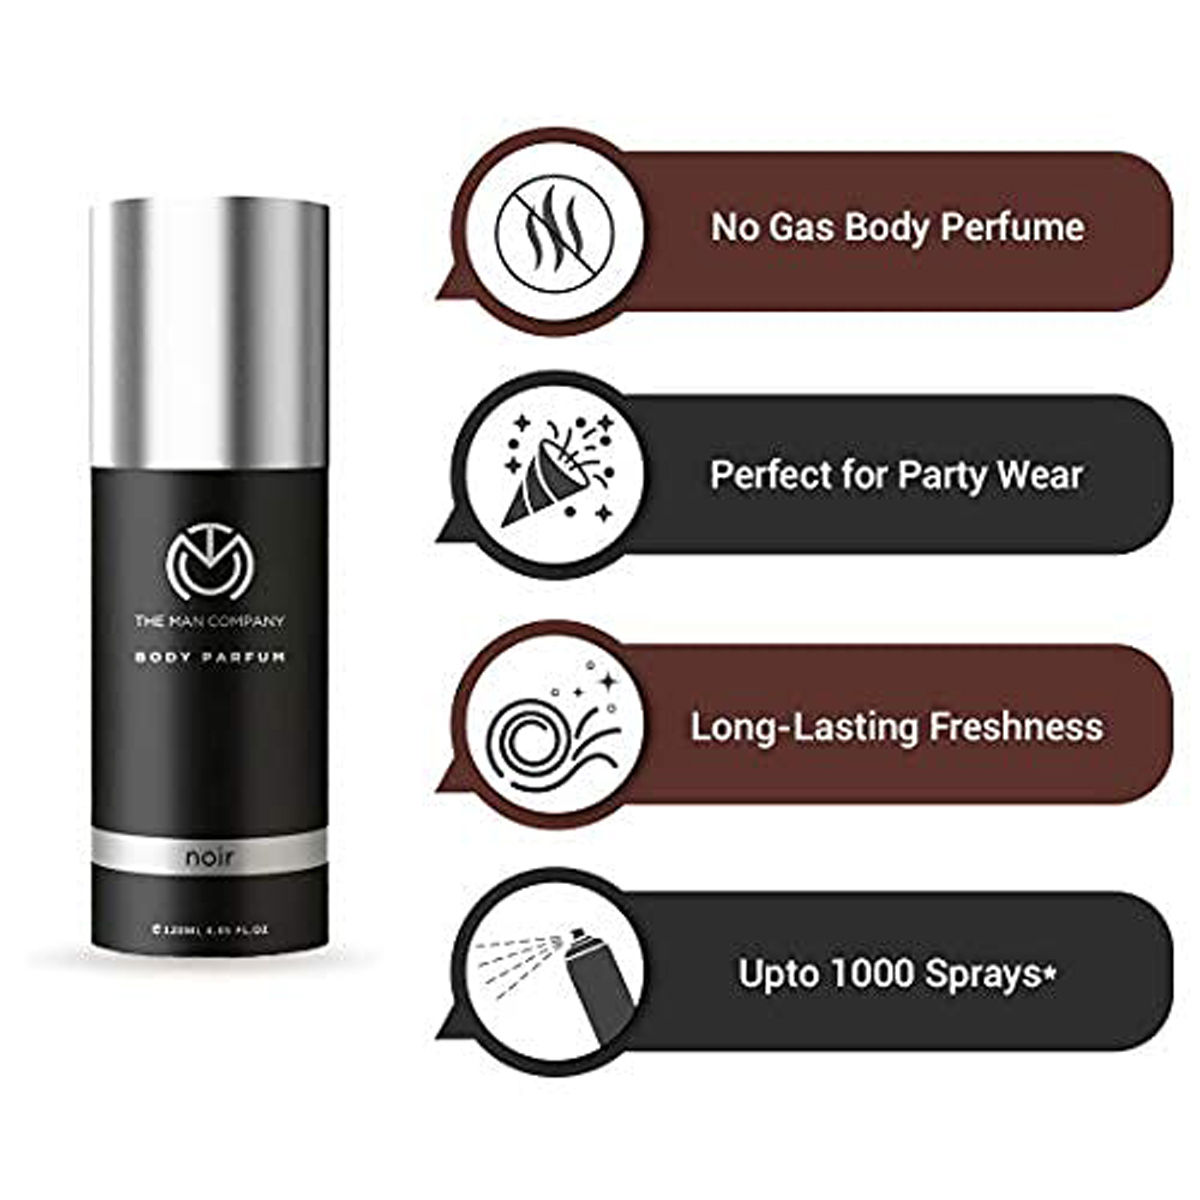 The Man Company Noir Body Perfume, 120 ml, Pack of 1 